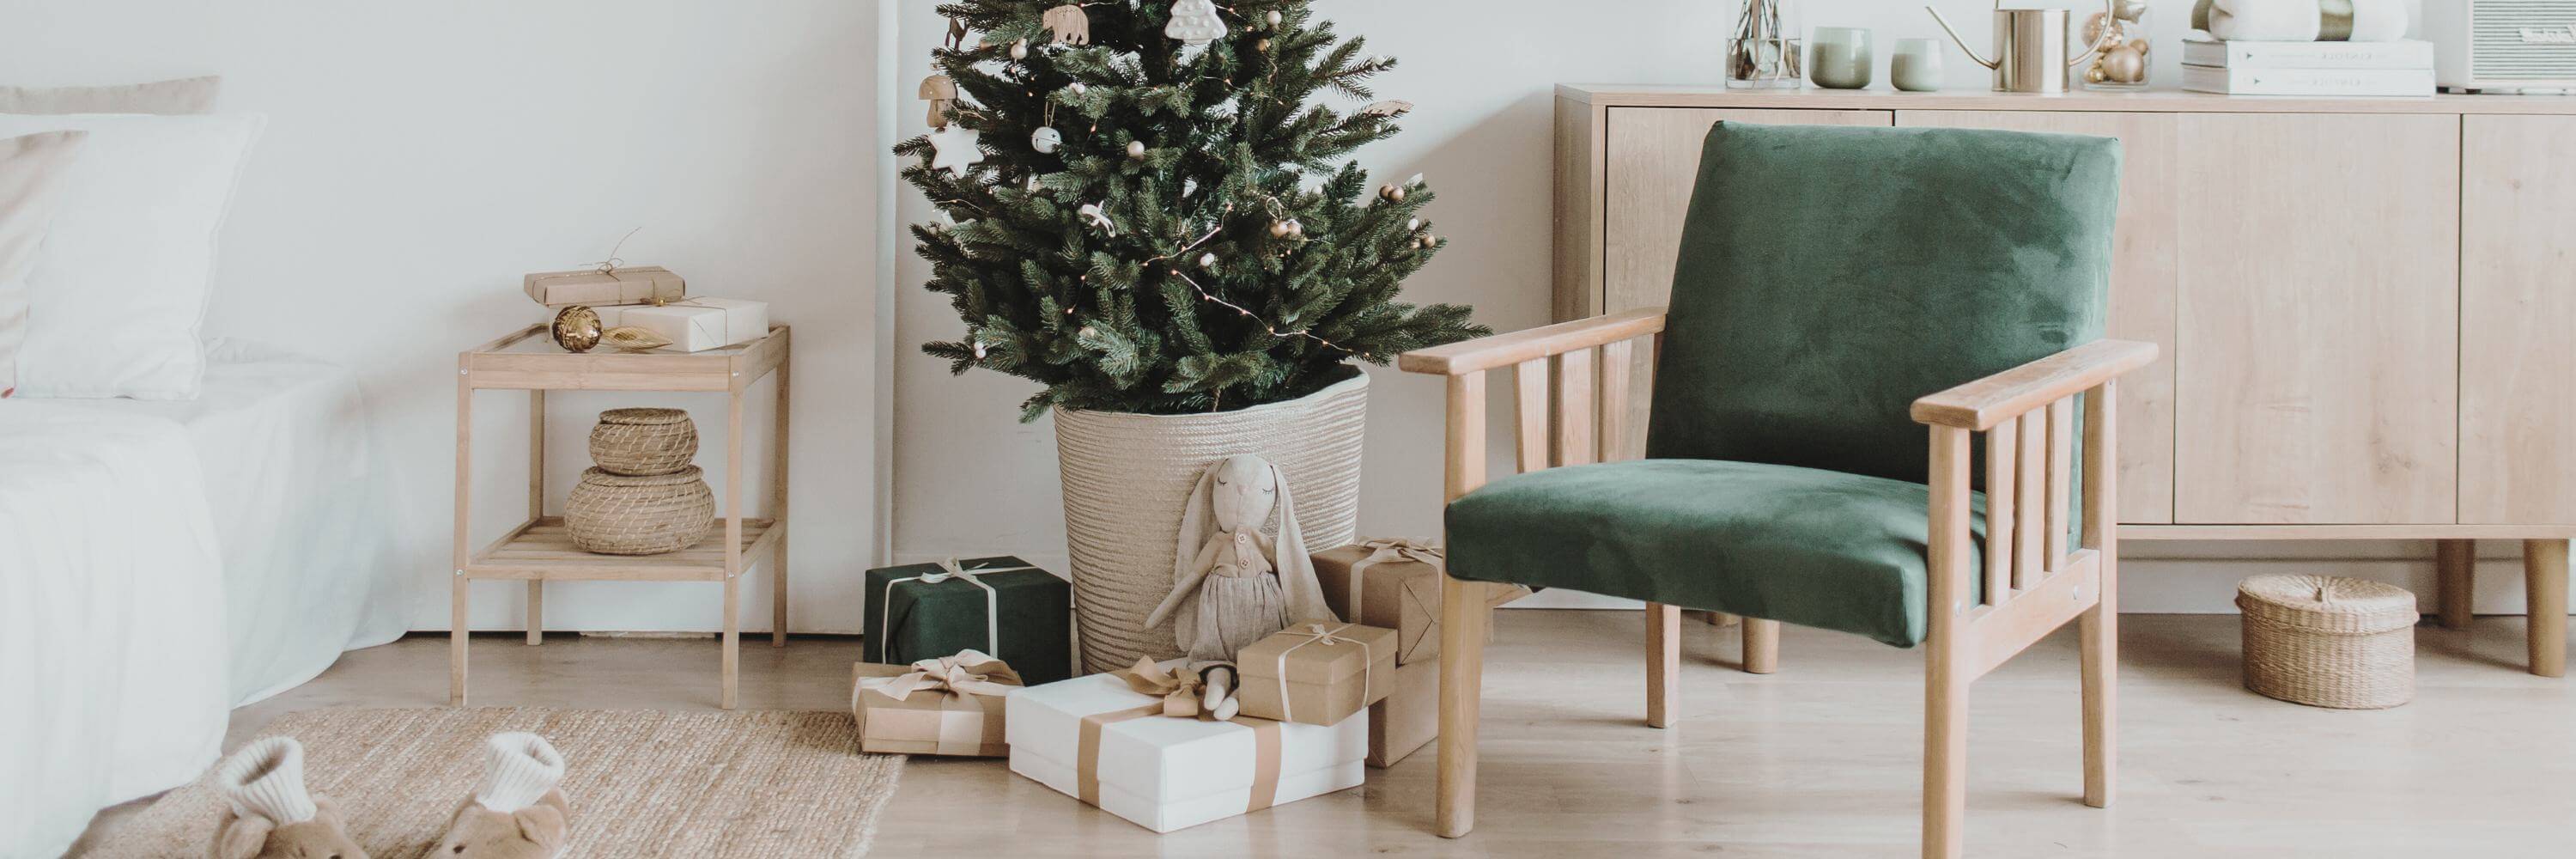 Christmas tree as seasonal decor next to a green armchair